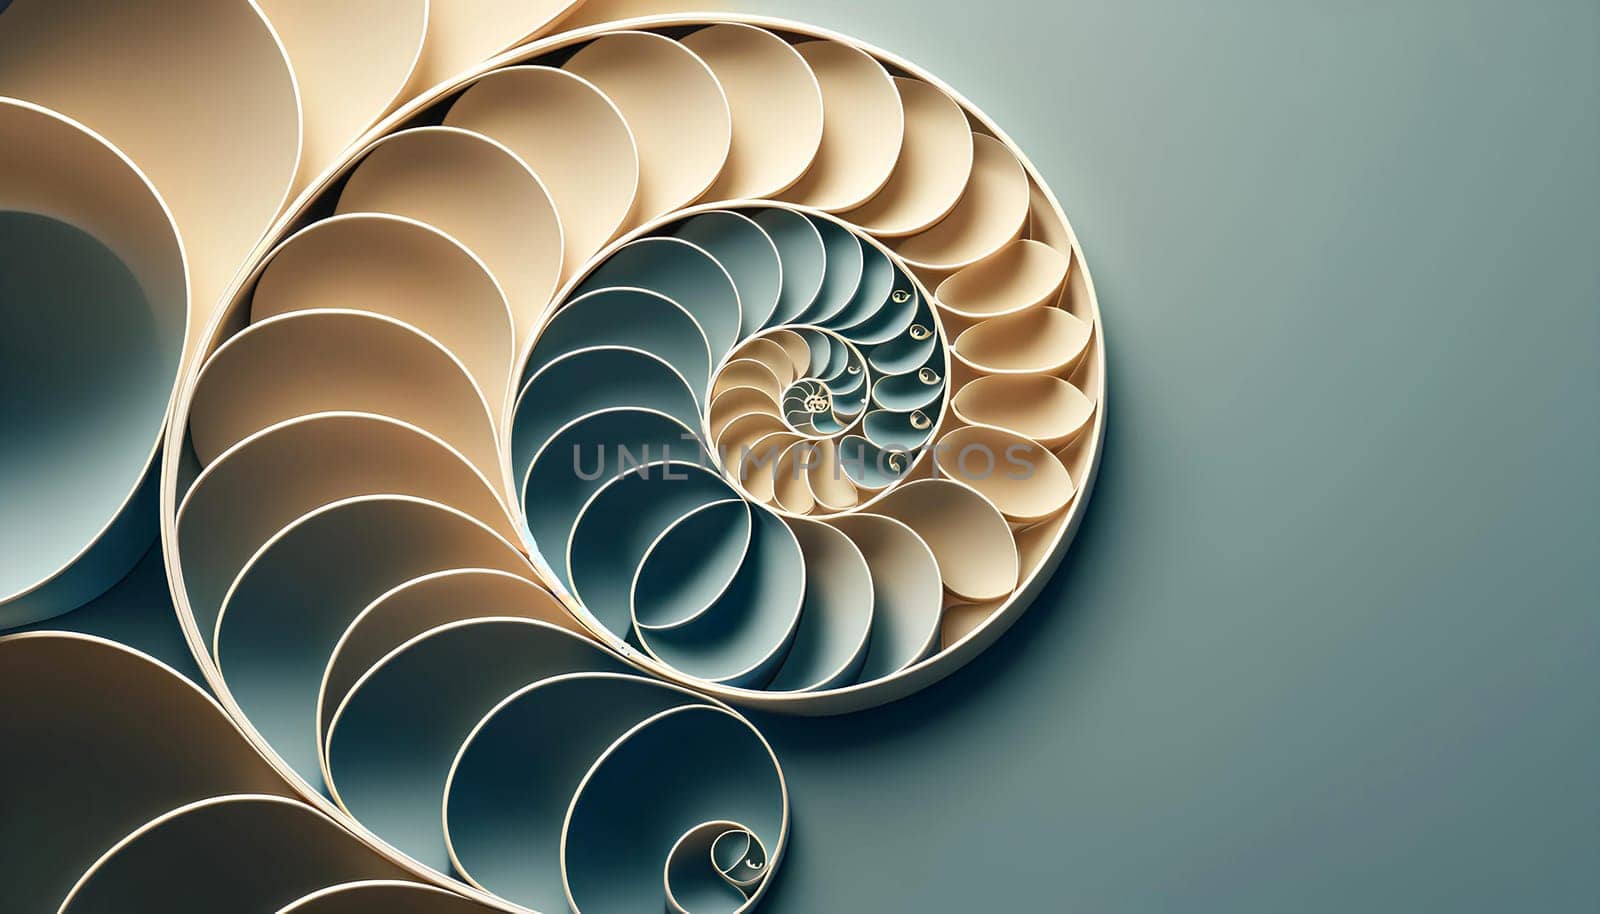 Close-up of a Fibonacci spiral figure with plenty of copy space on a light blue background.